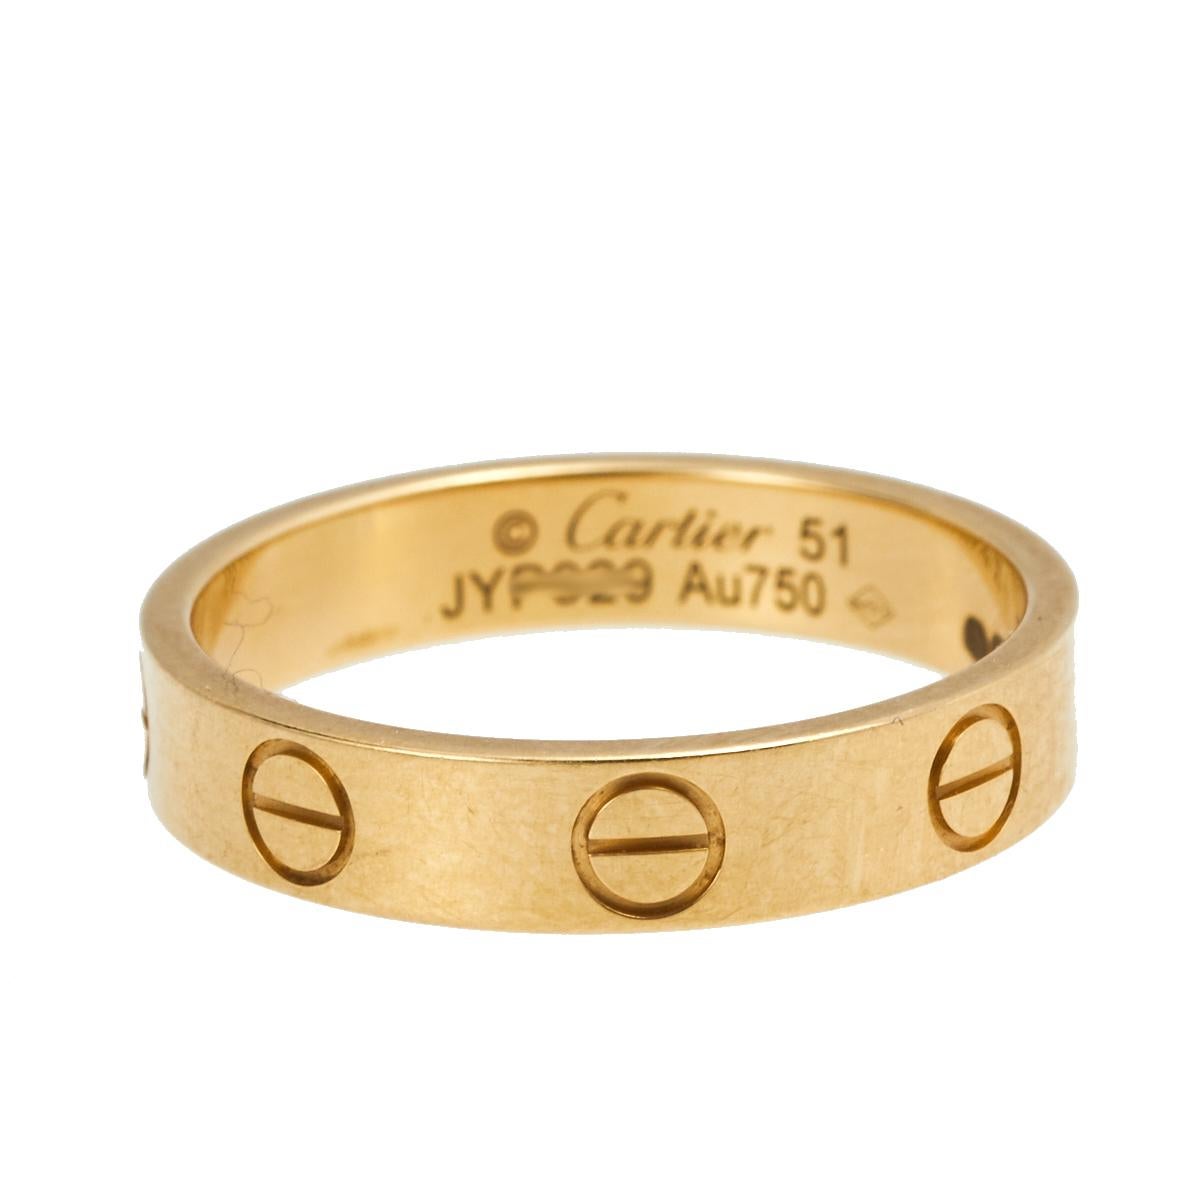 Contemporary Cartier Love 18K Yellow Gold Narrow Wedding Band Ring Size 51